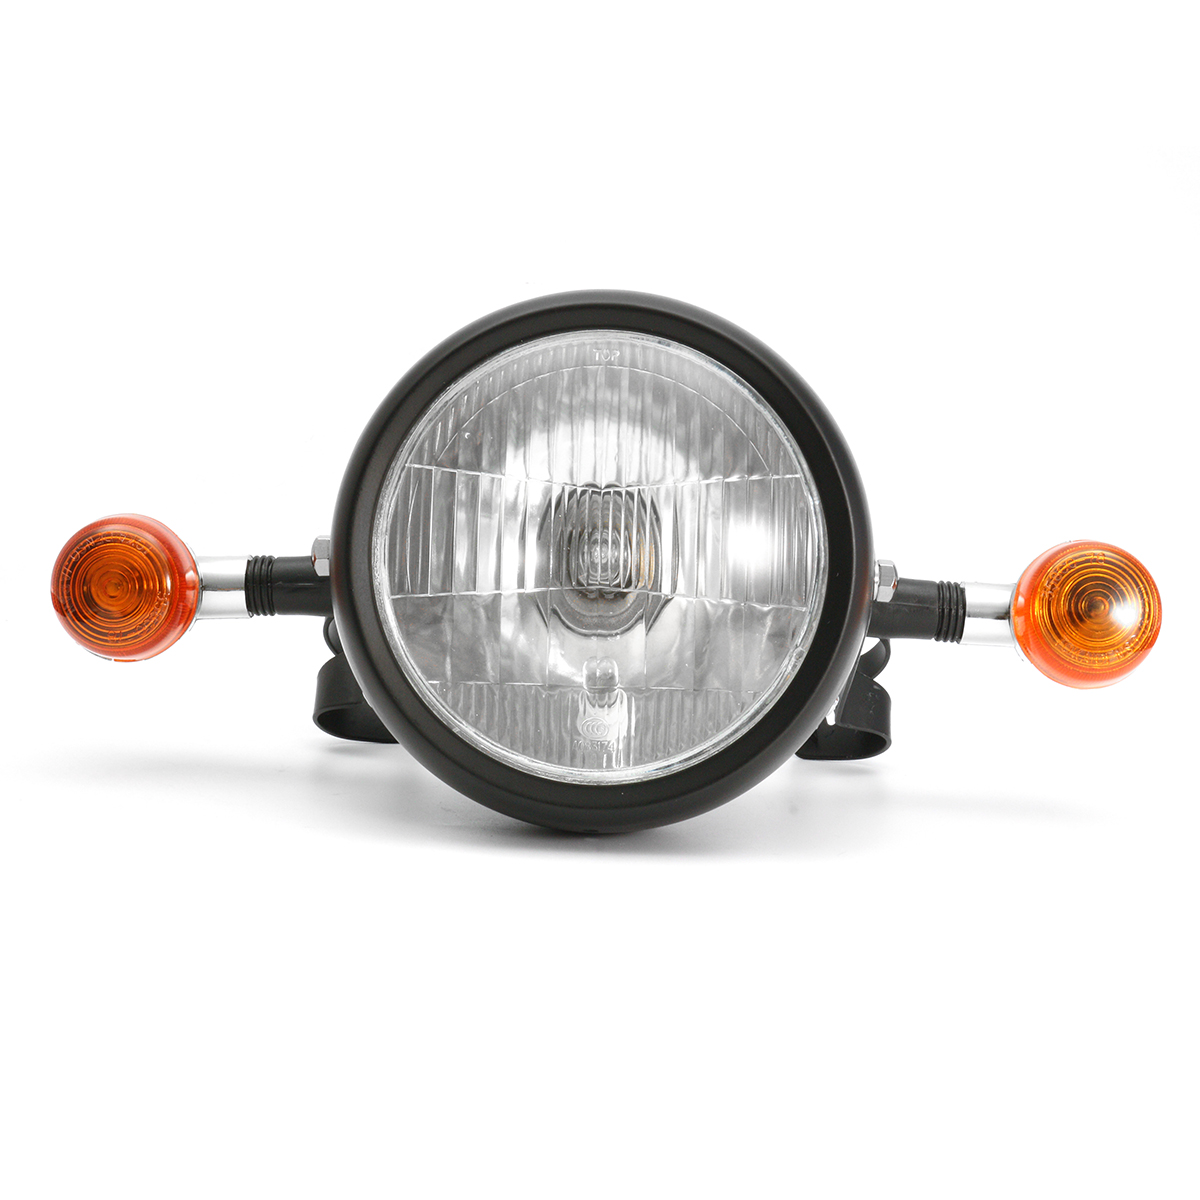 Motorcycle Retro Headlight Turn Signal Lamp Bulb Mount Cafe Racer Bobber Chopper